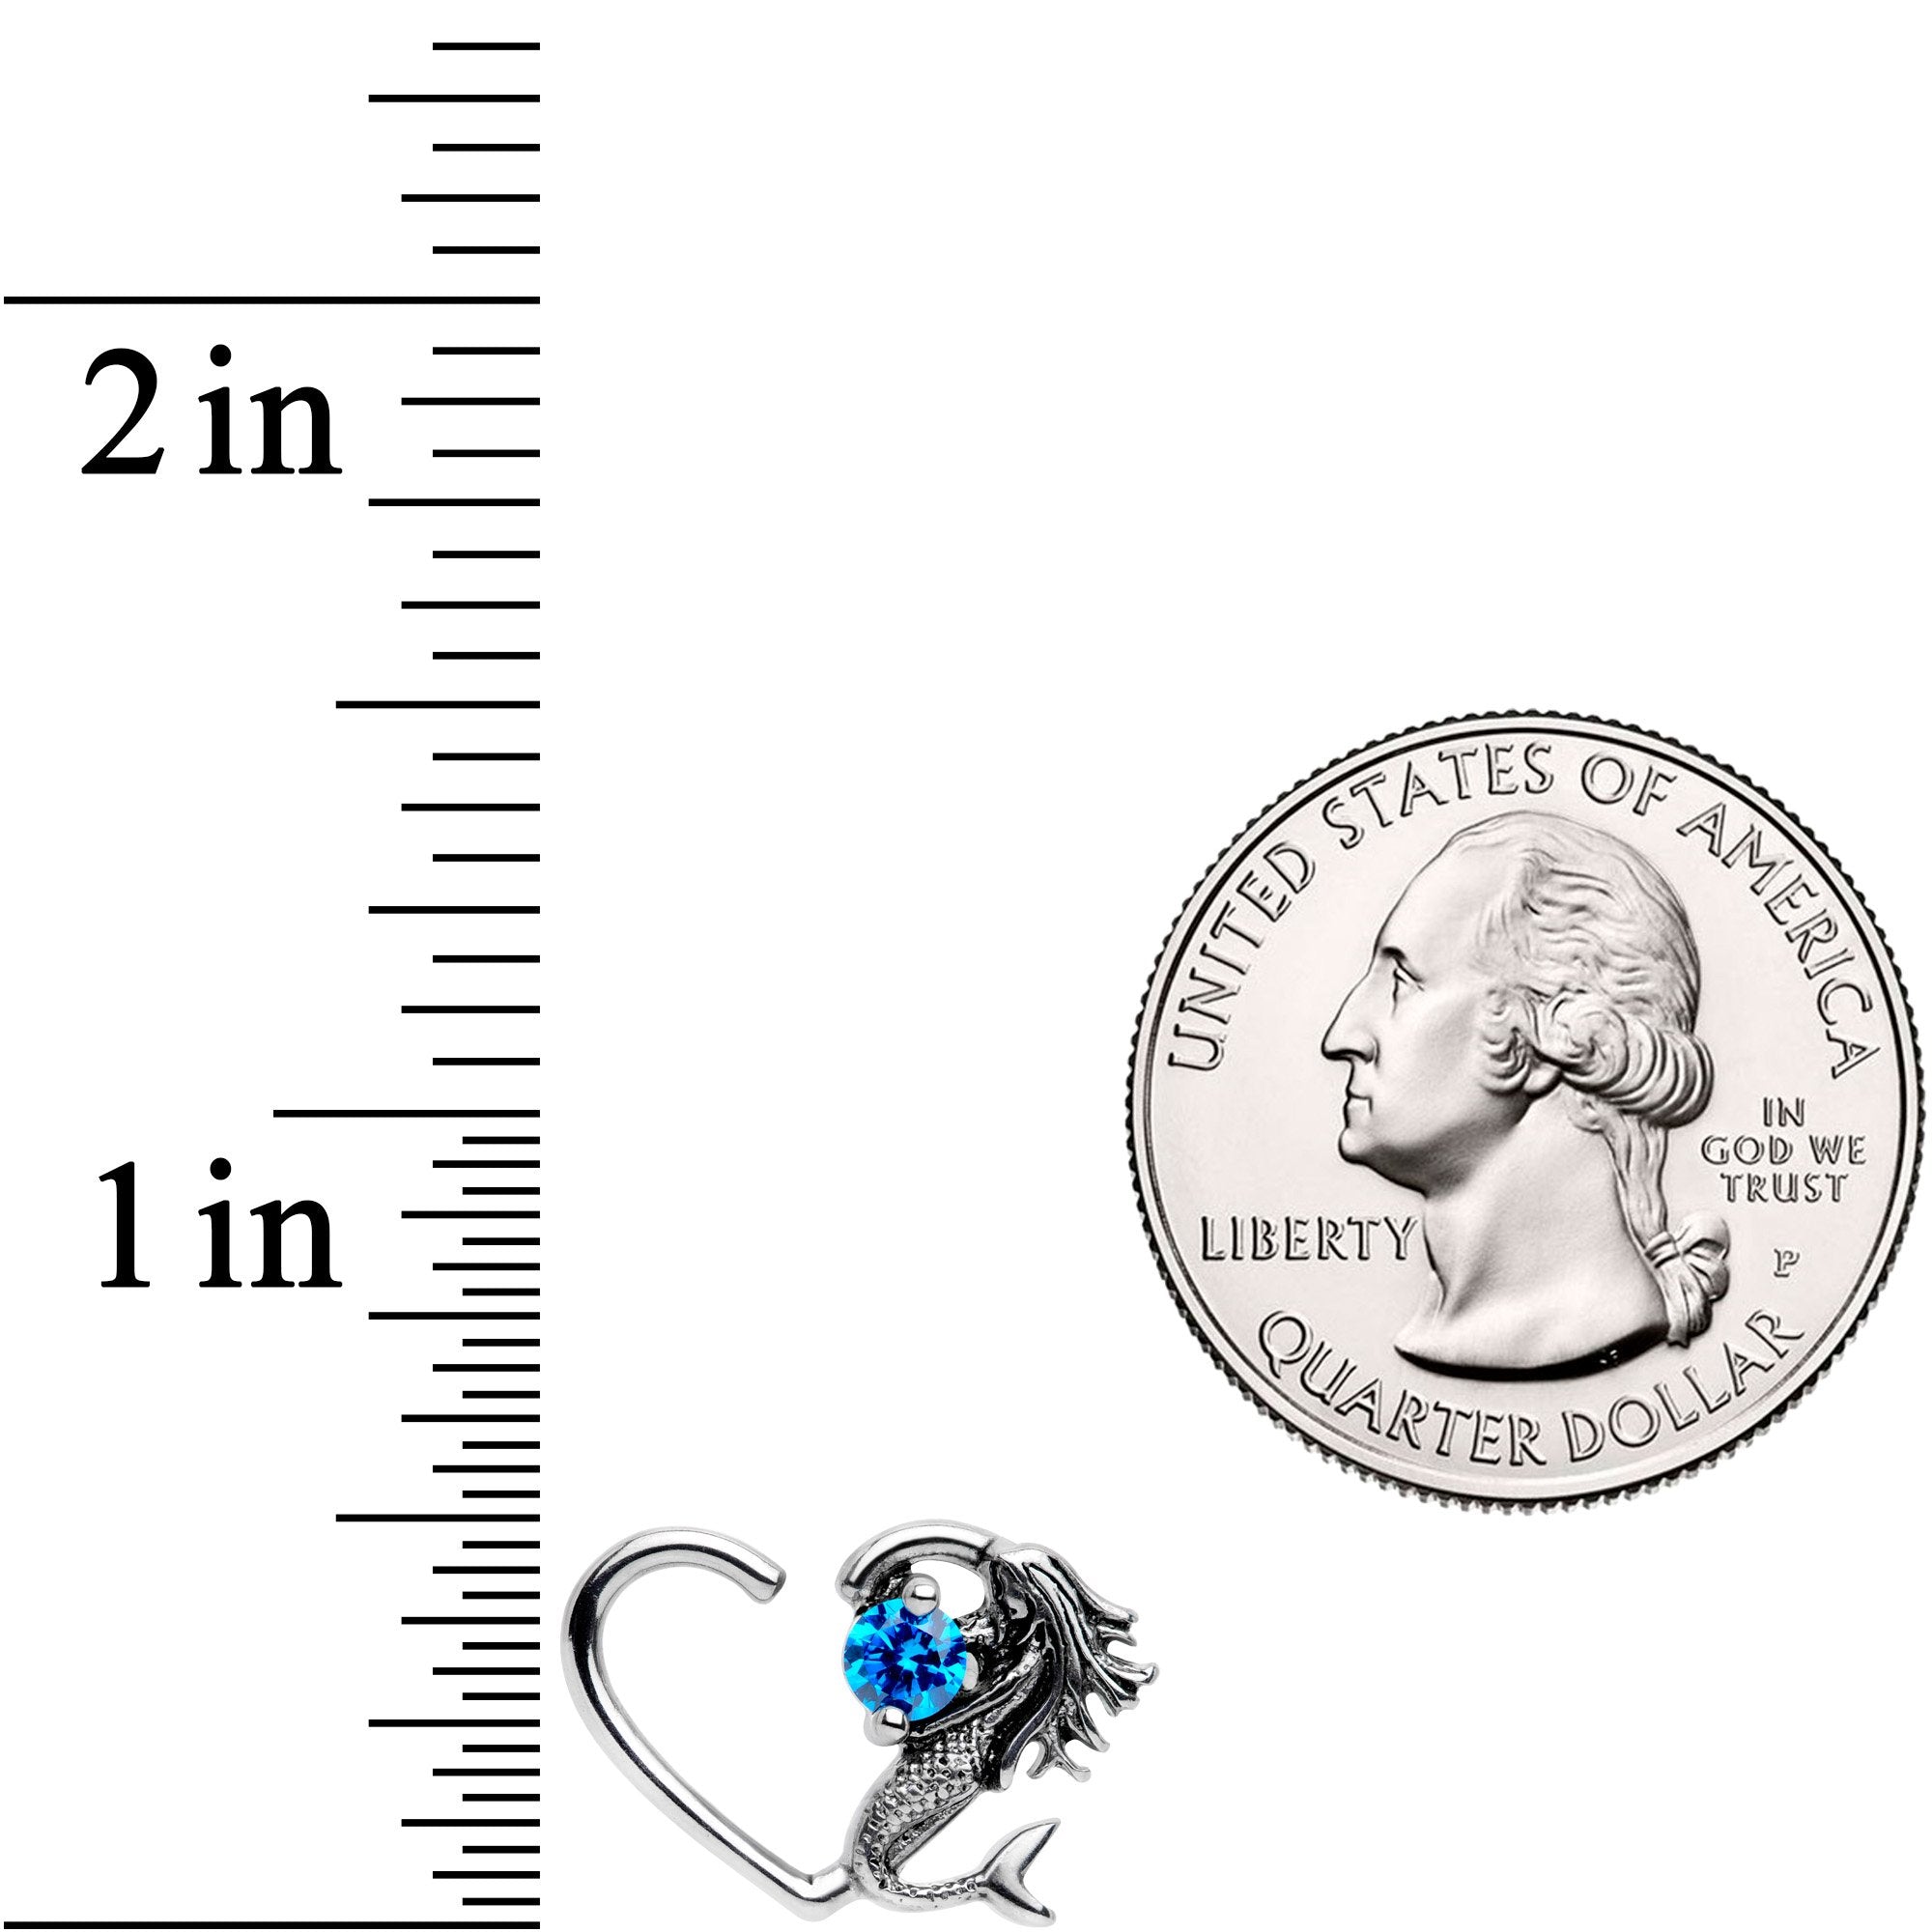 16 Gauge 3/8 Blue CZ Gem Mermaid Treasure Left Heart Closure Ring